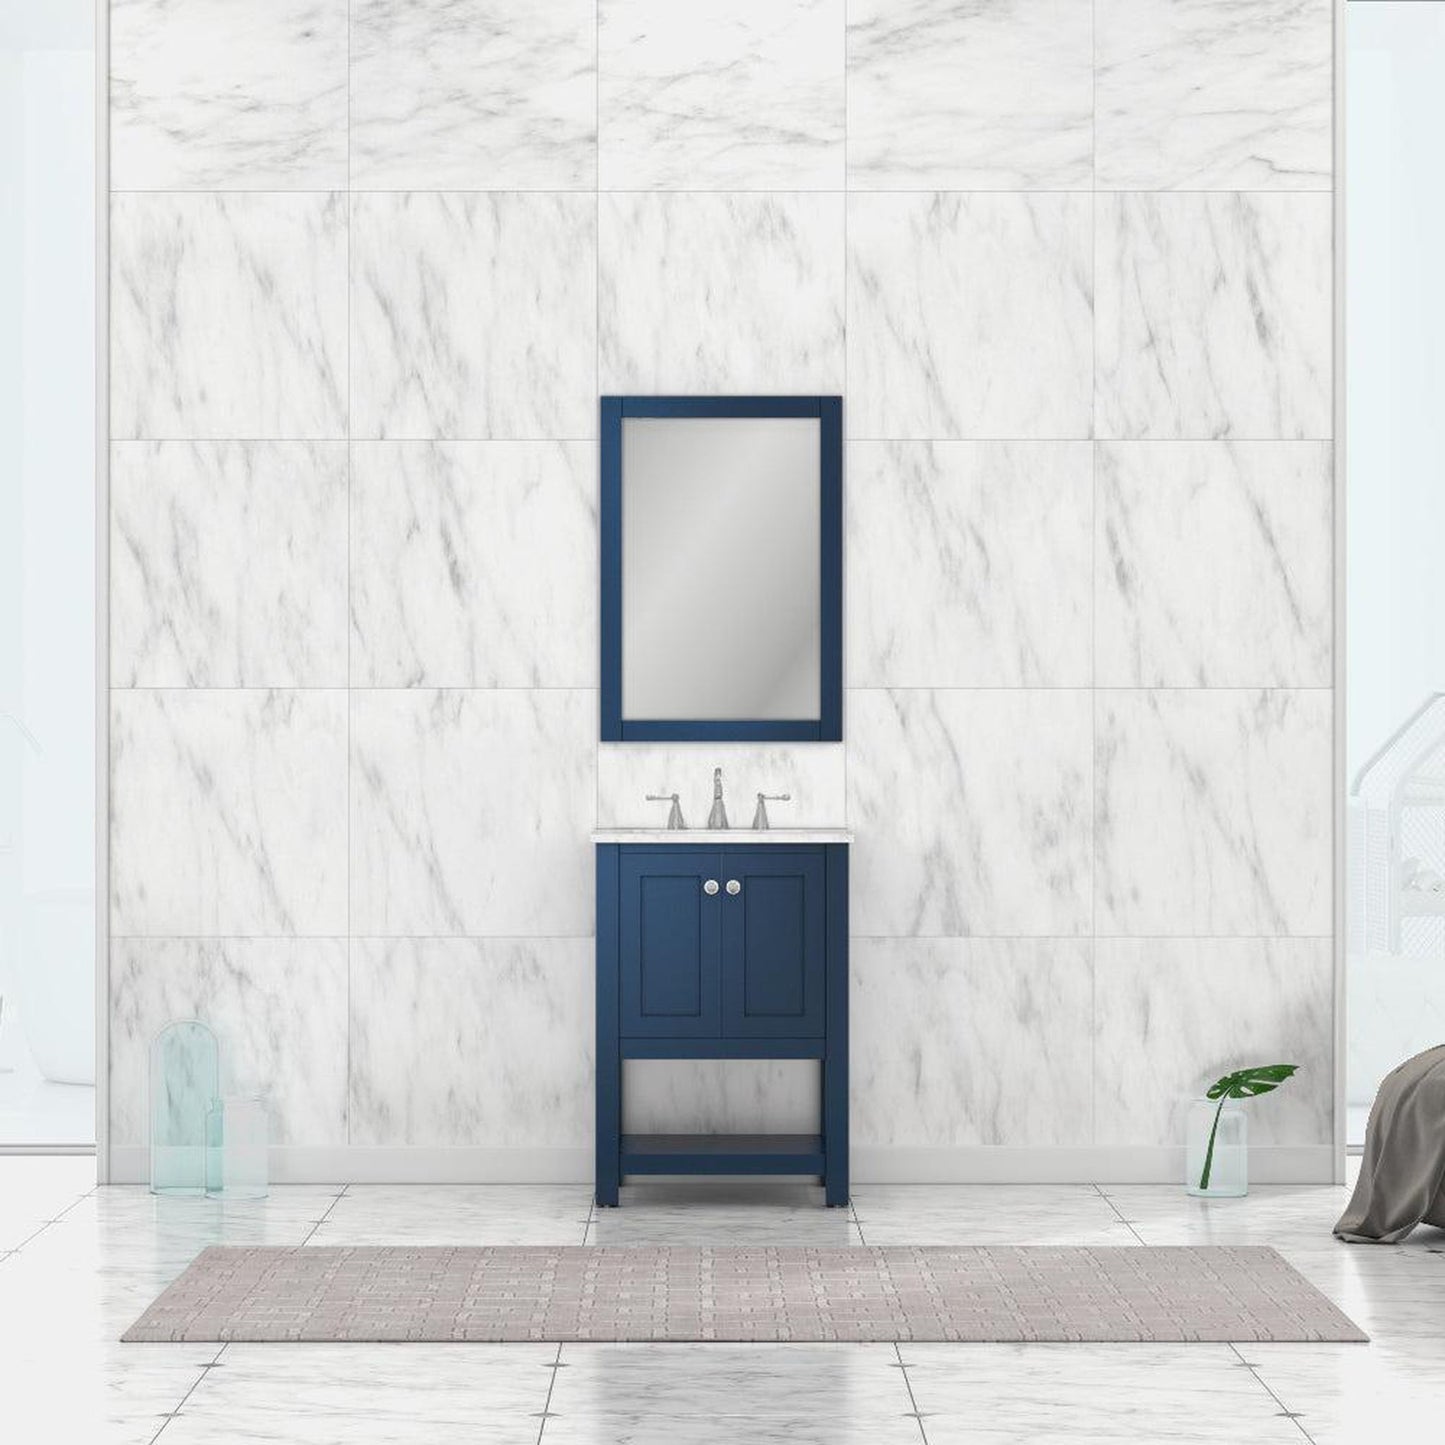 Alya Bath Wilmington 24" Single Blue Freestanding Bathroom Vanity With Carrara Marble Top, Ceramic Sink and Wall Mounted Mirror